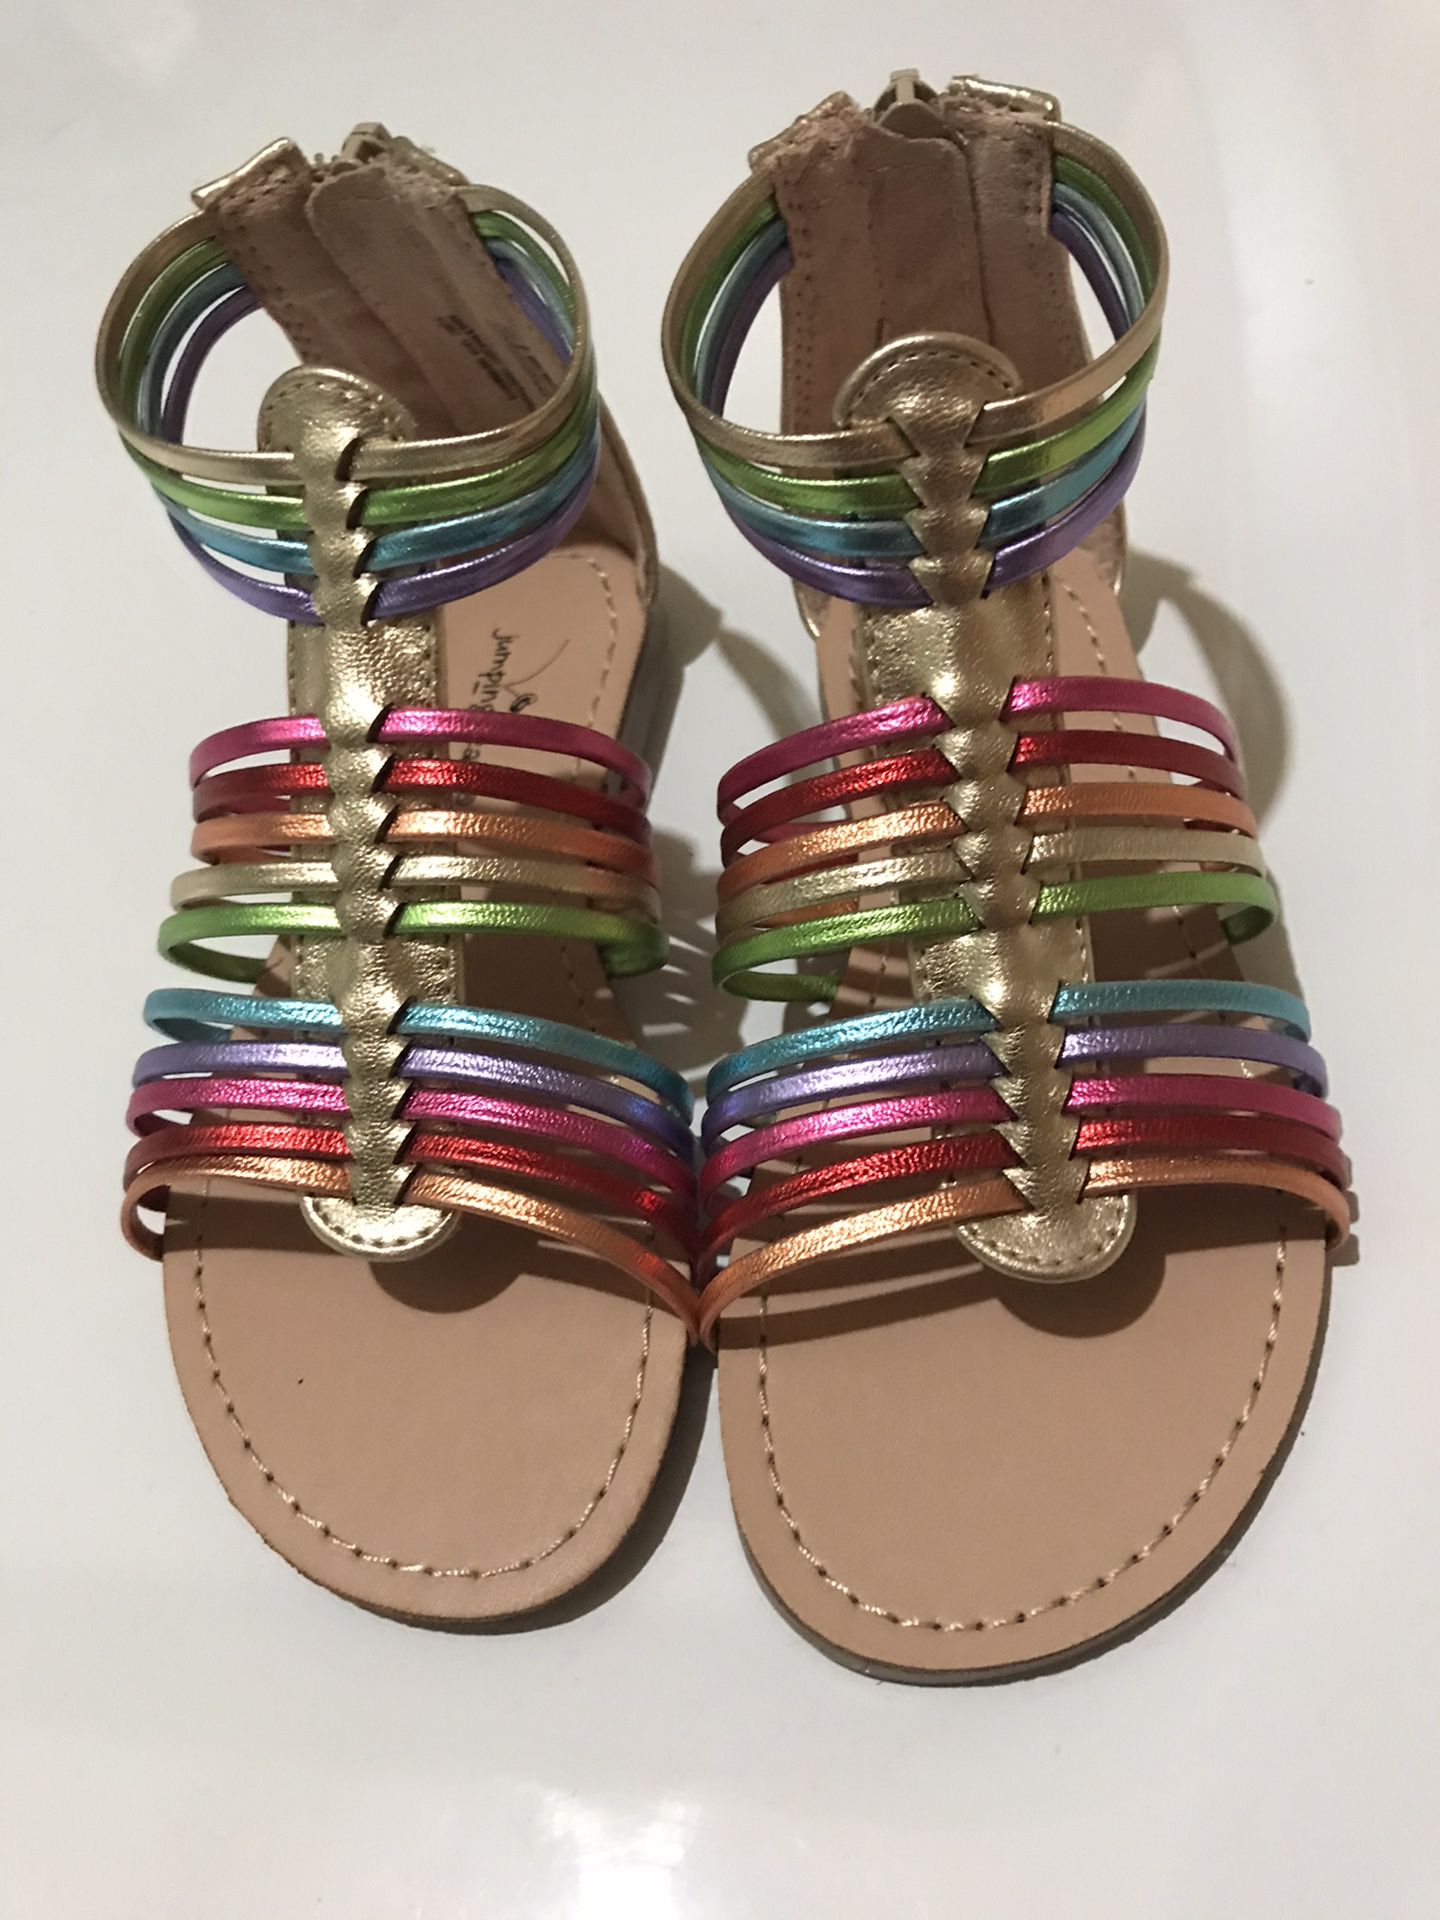 Little girls- Size 9 - New sandals